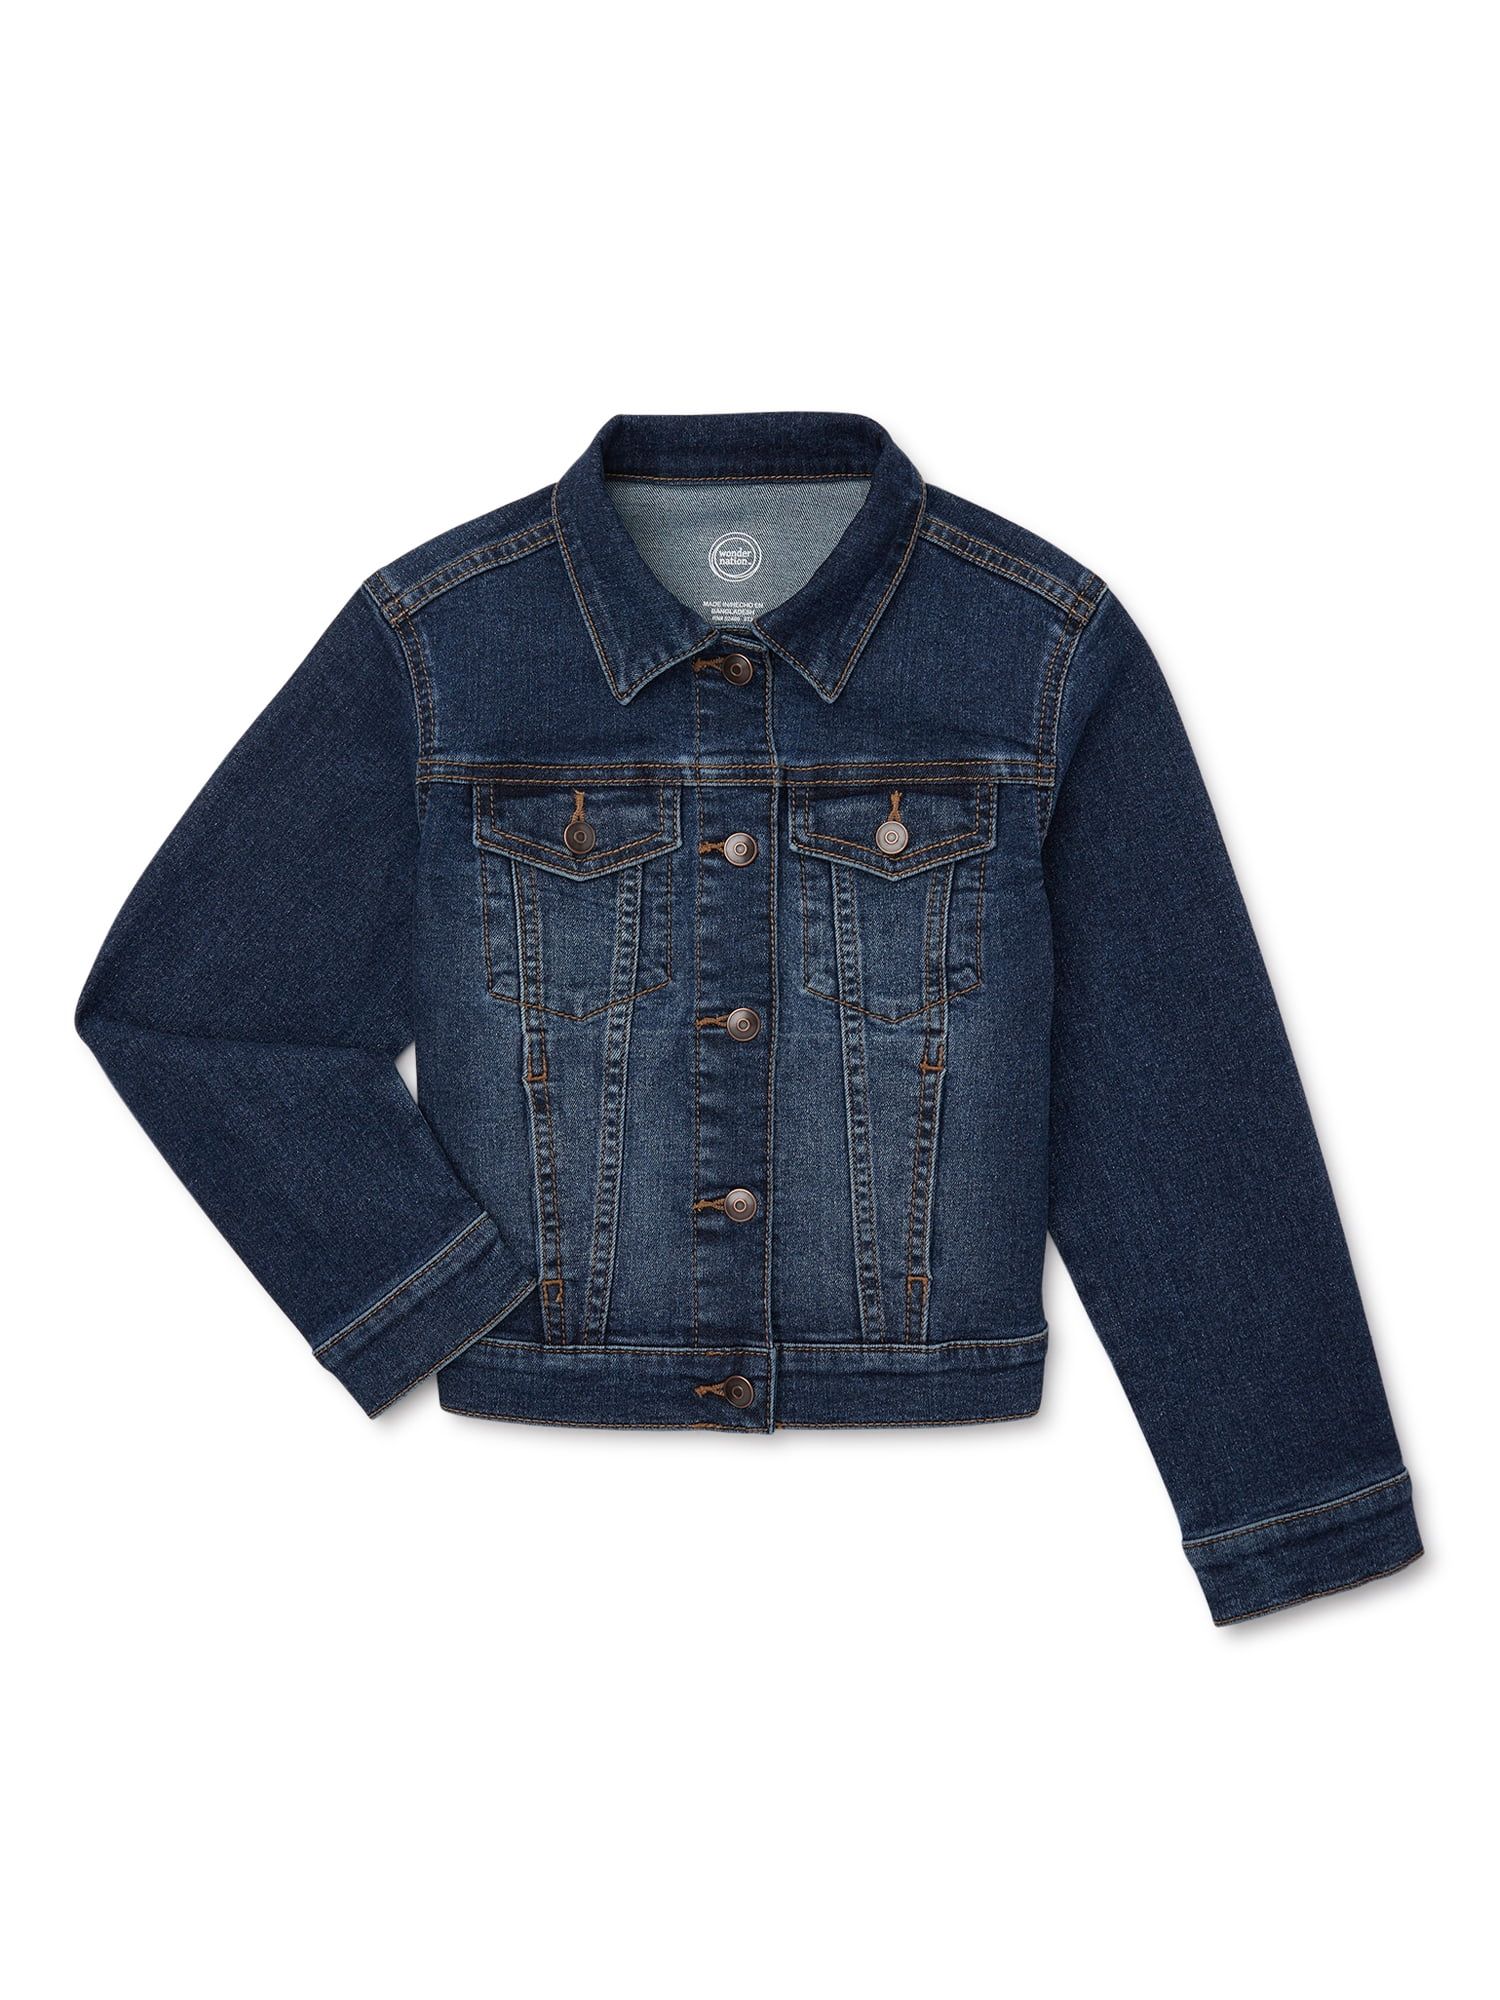 Wonder Nation Denim Jacket, Sizes 4-18 & Plus | Walmart (US)